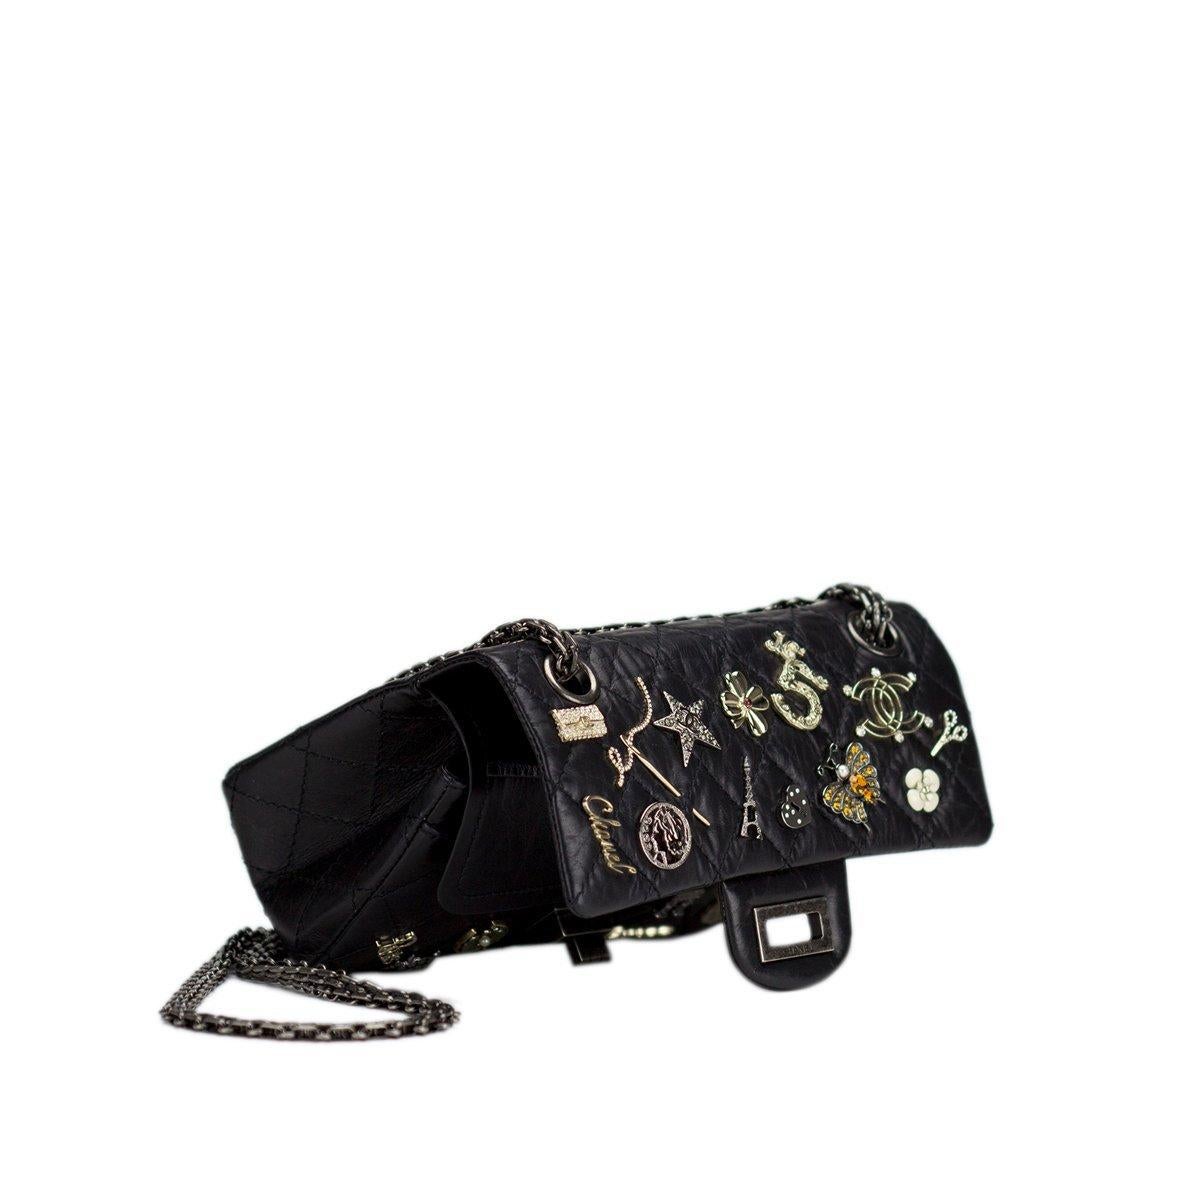 Chanel 2012 Small Reissue Charm Paris Icons Mini Flap Bag Limited Edition Bag 3